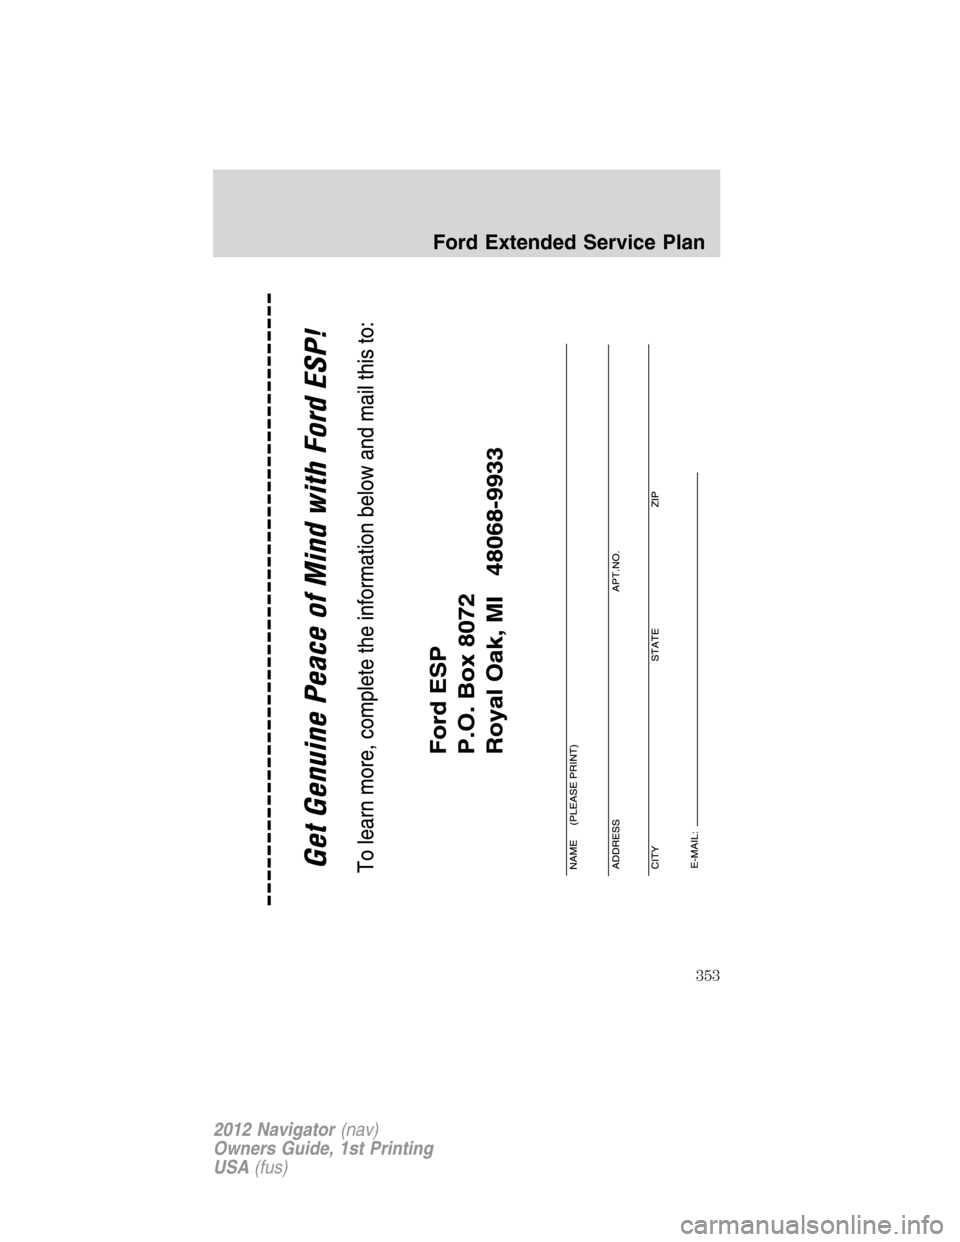 LINCOLN NAVIGATOR 2012  Navigation Manual Ford Extended Service Plan
353
2012 Navigator(nav)
Owners Guide, 1st Printing
USA(fus) 